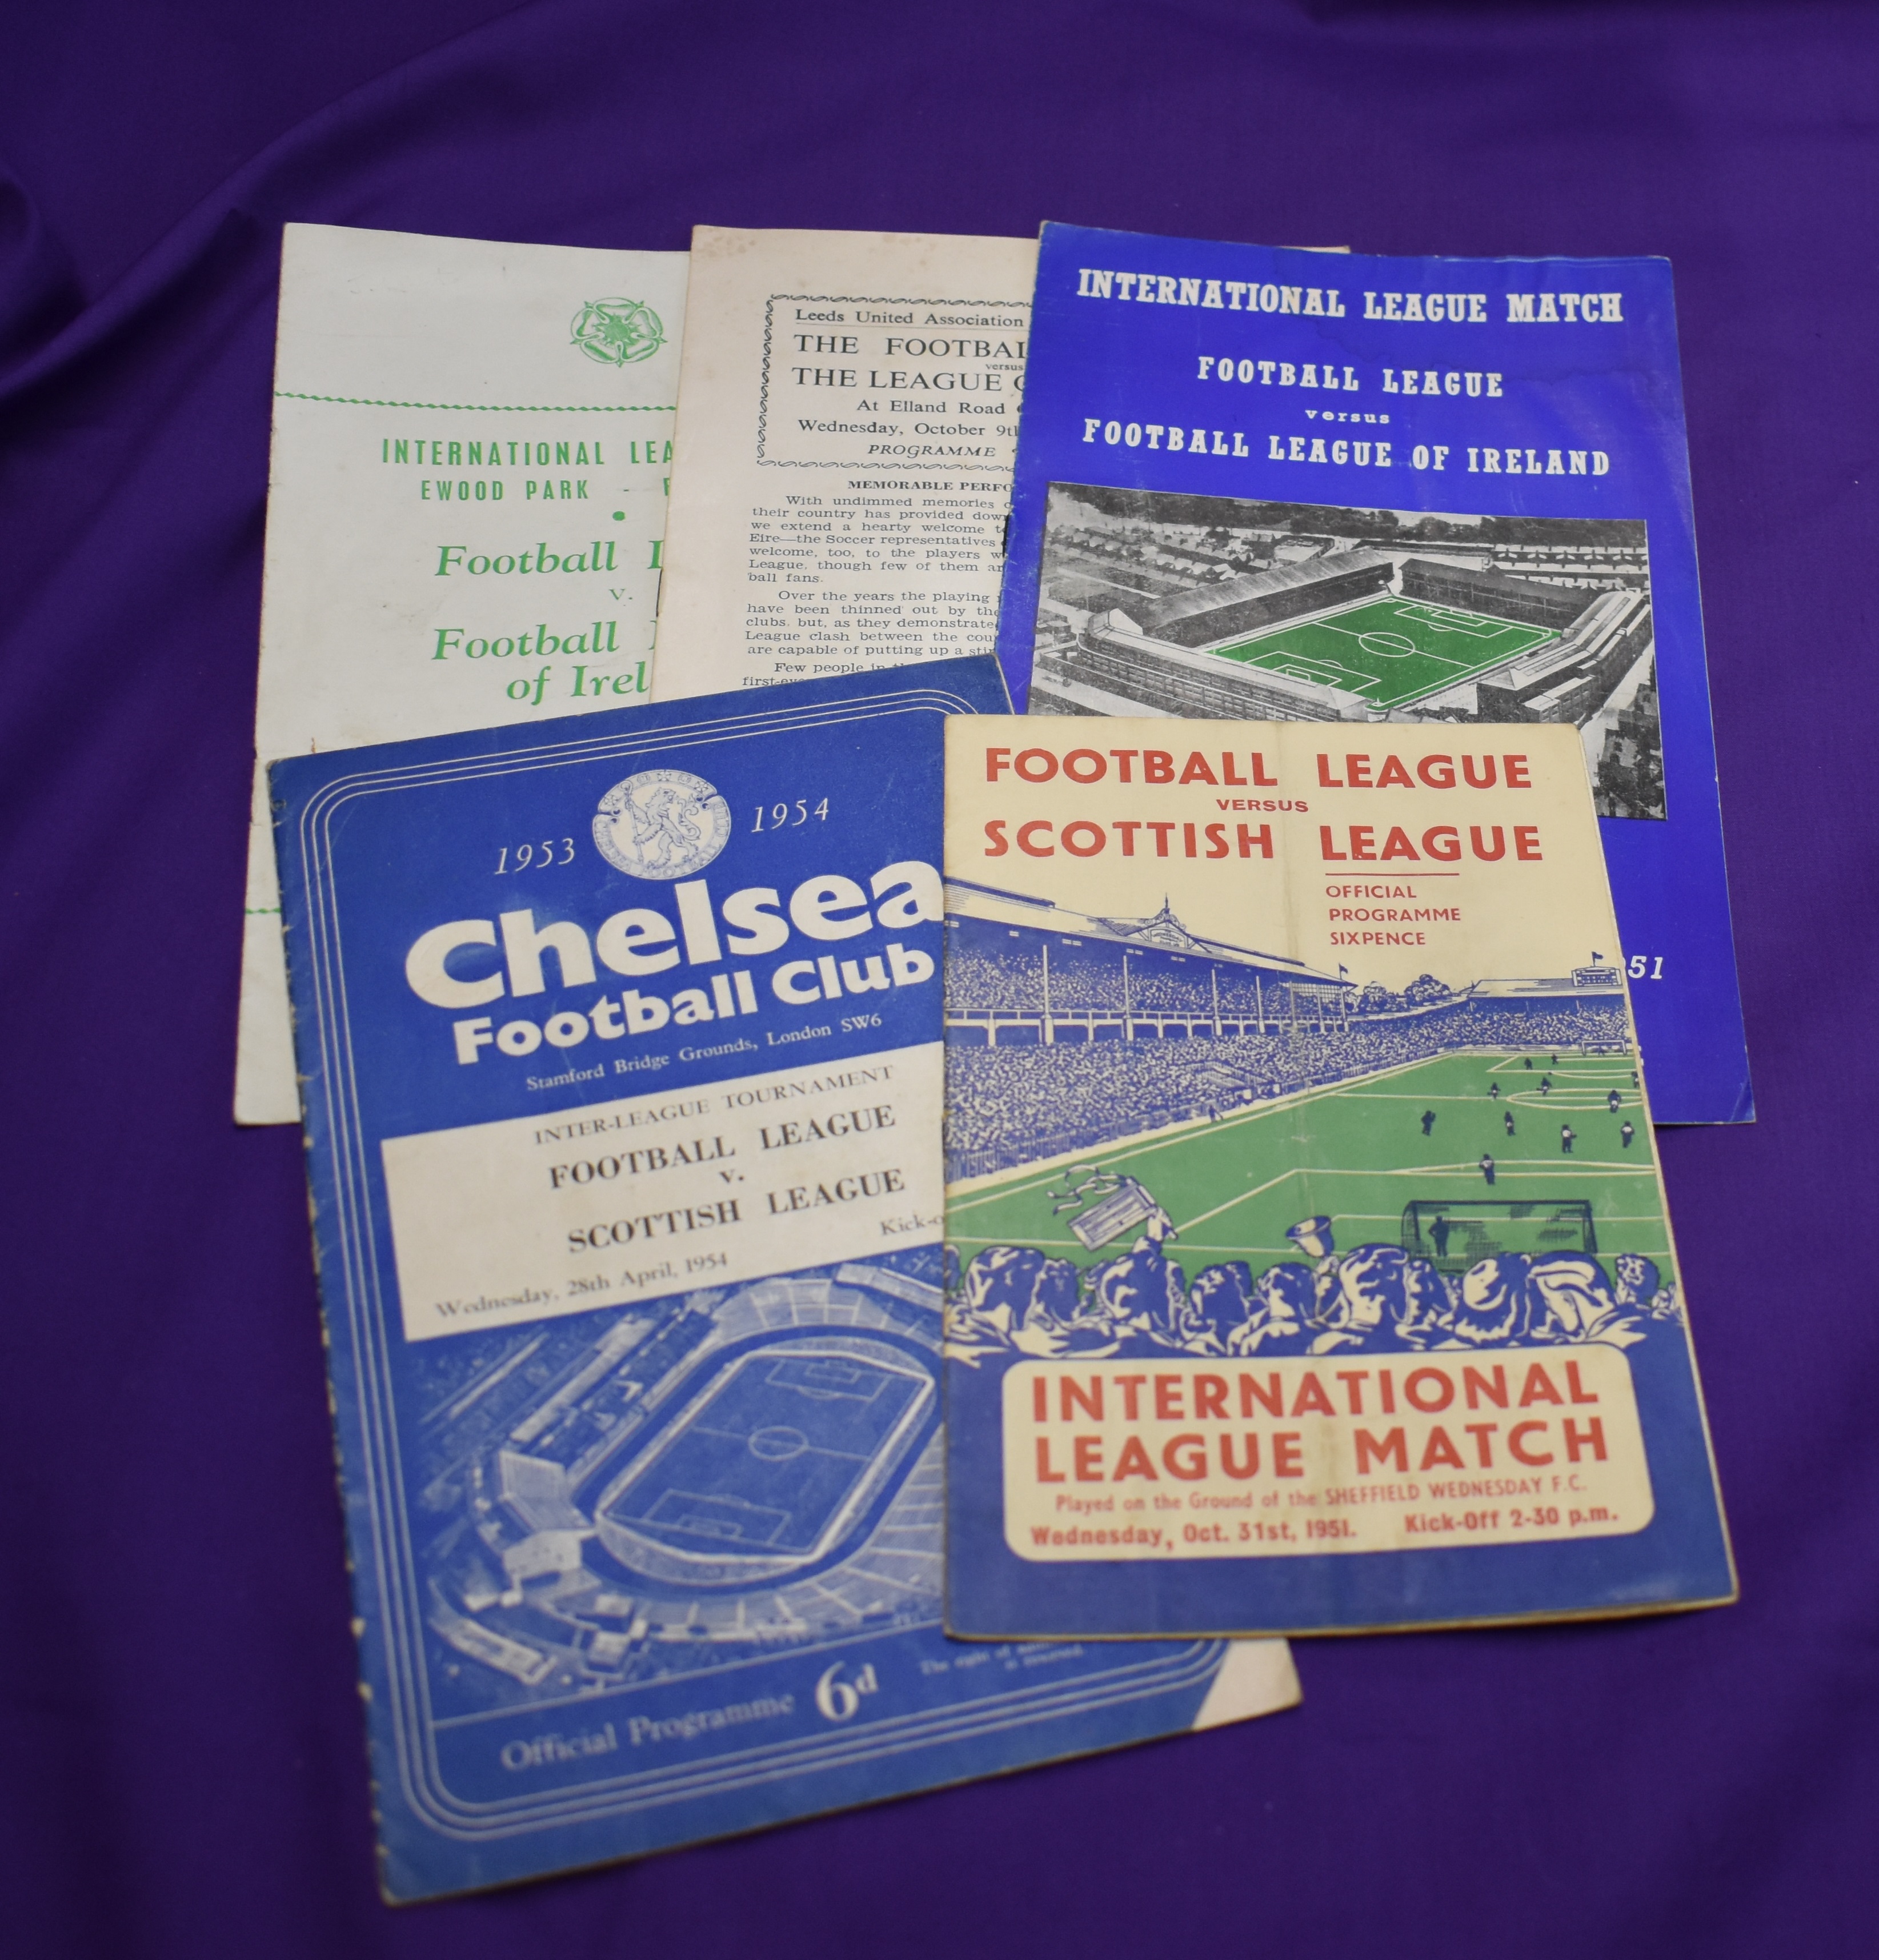 A collection of 5 International Football League match programmes - Football League v Scottish League